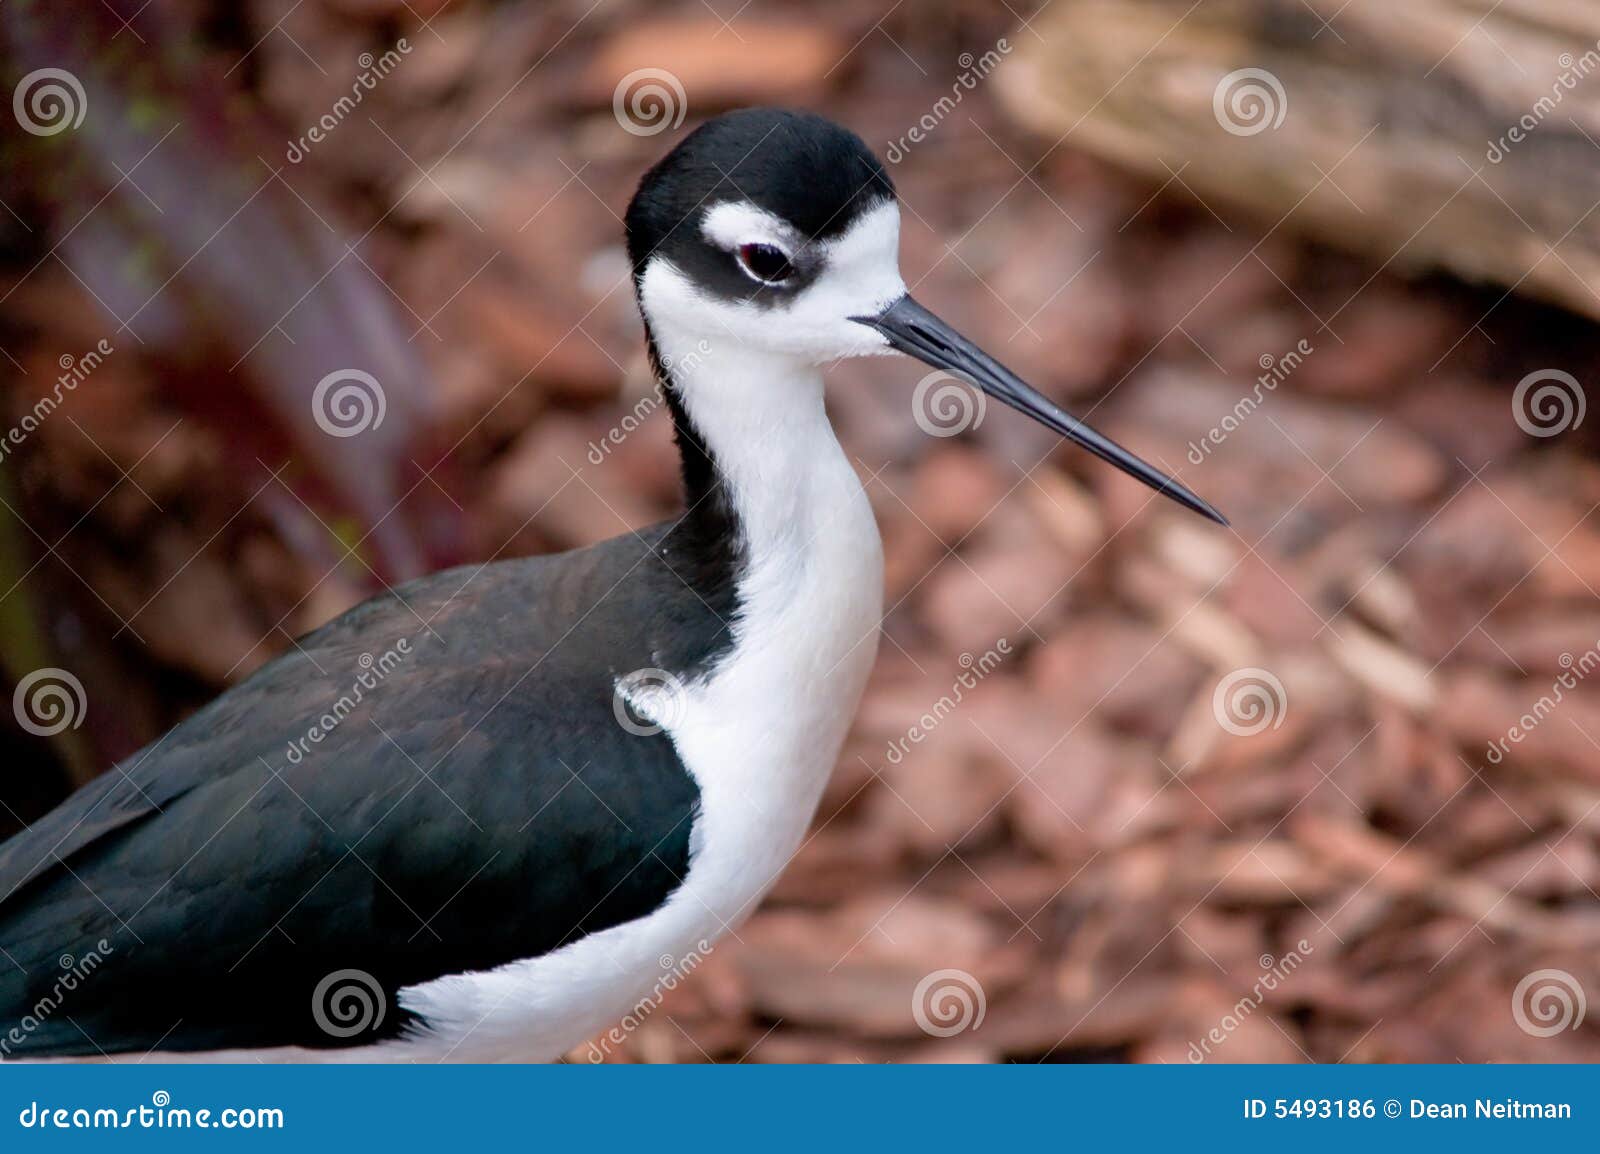 Bird with long beak stock photo. Image of outdoor, outdoors - 5493186